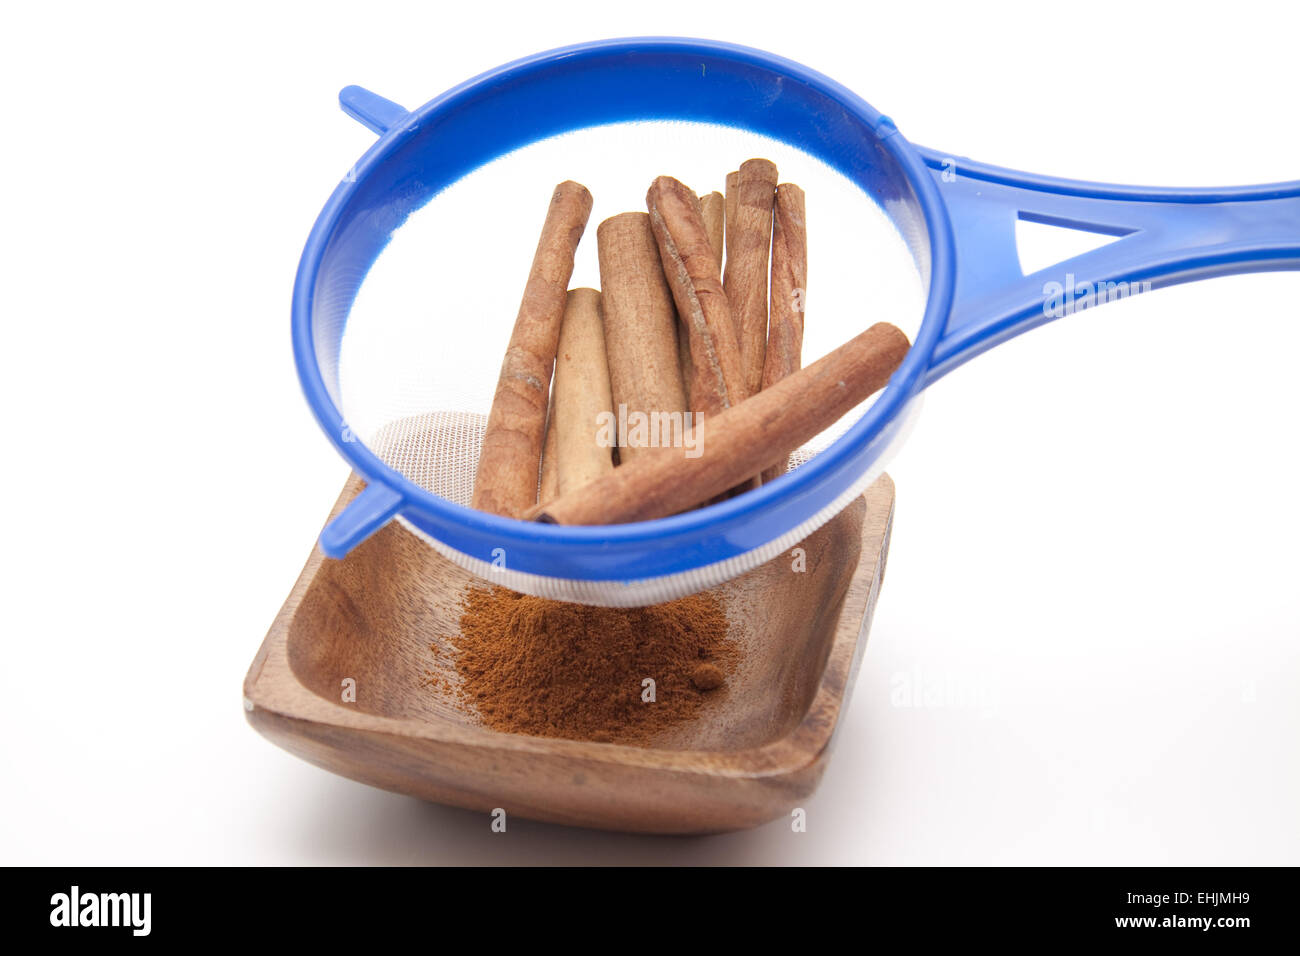 Cinnamon sticks in the culinary sieve Stock Photo